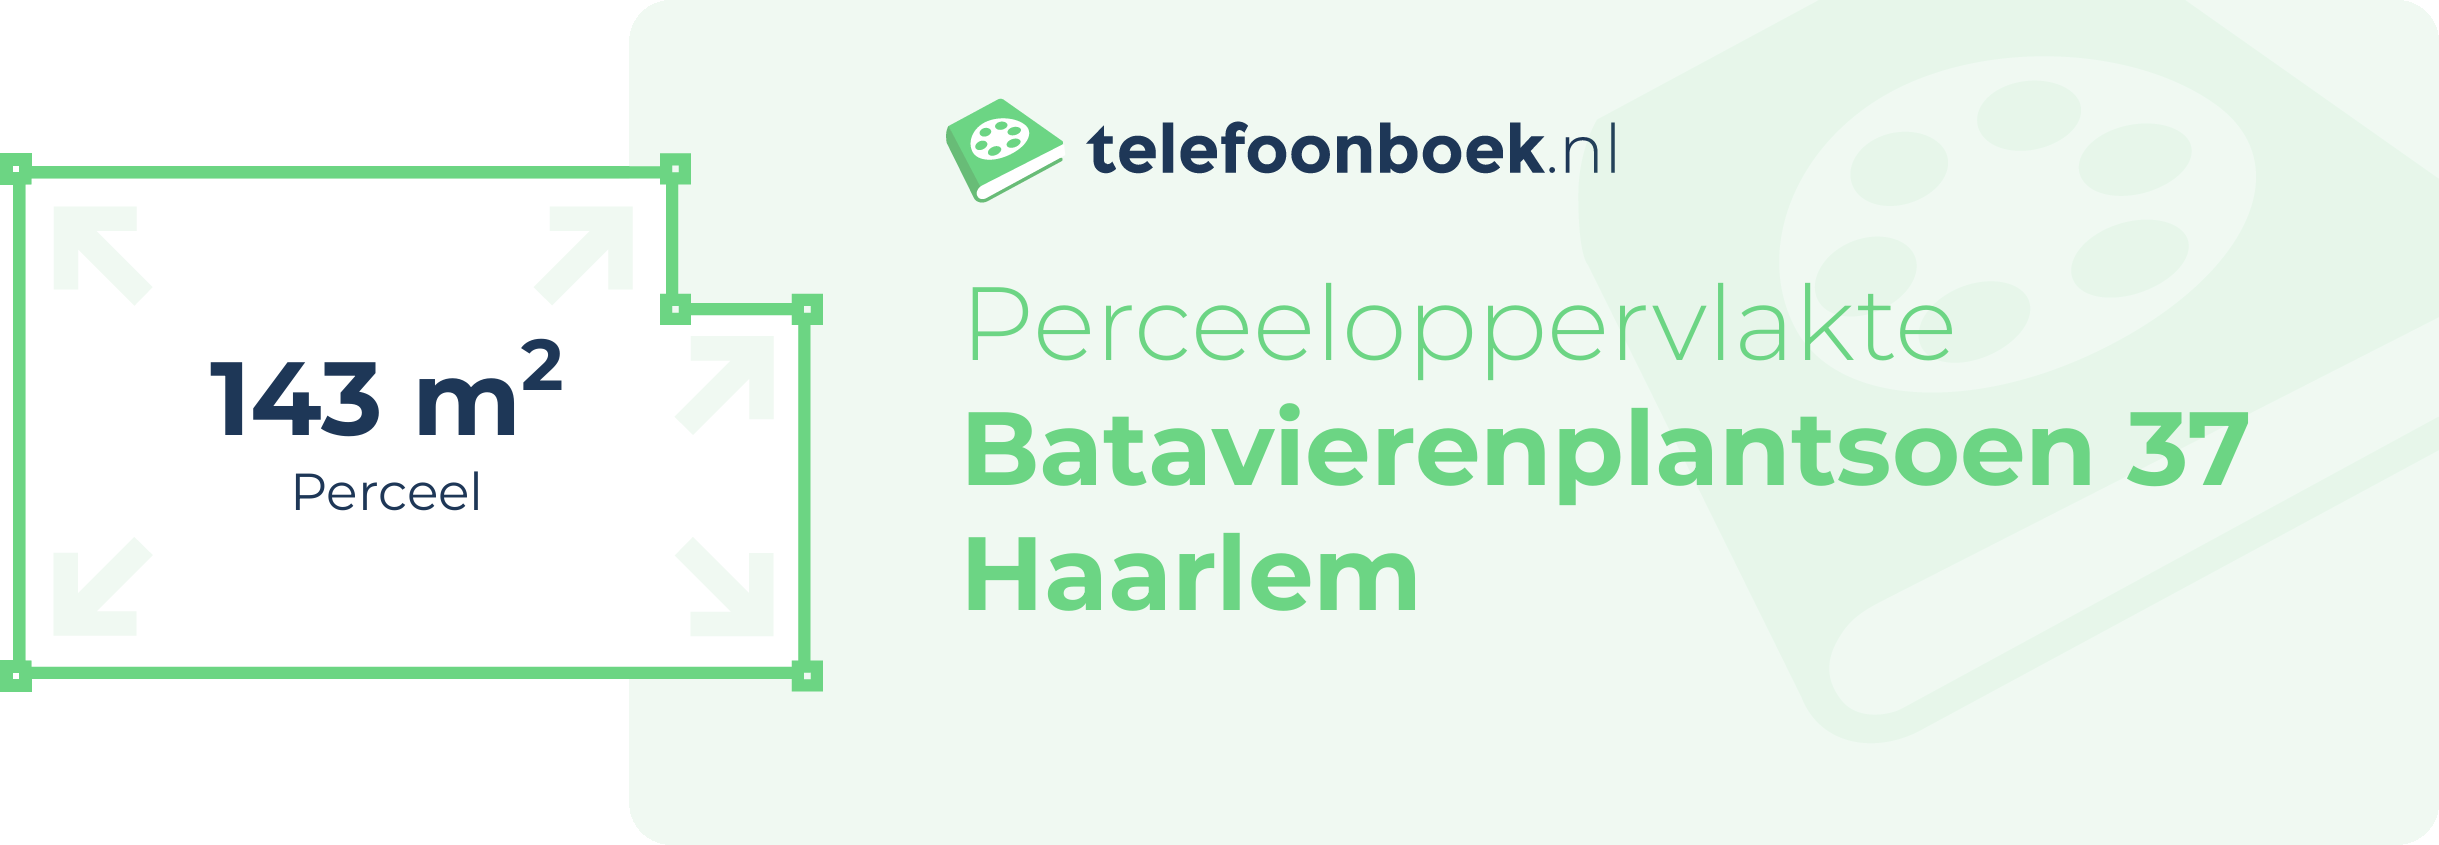 Perceeloppervlakte Batavierenplantsoen 37 Haarlem